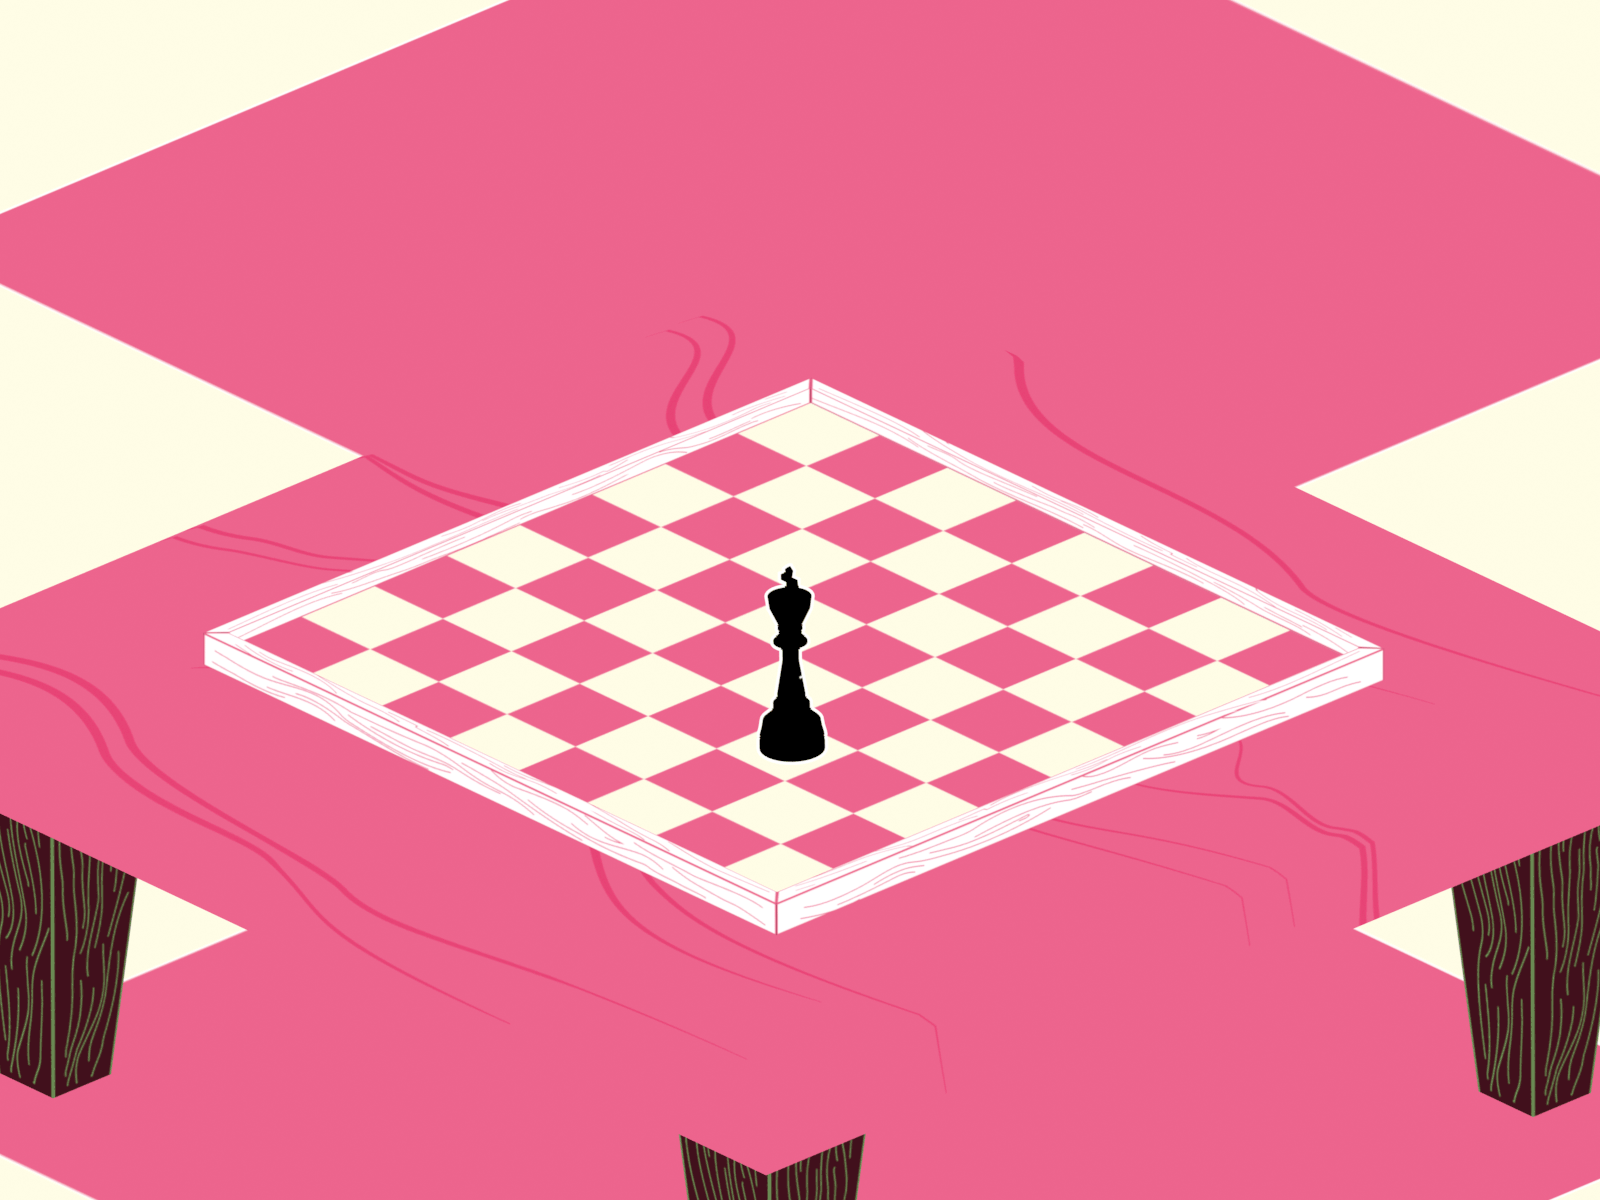 Checkmate blender3d illustrator